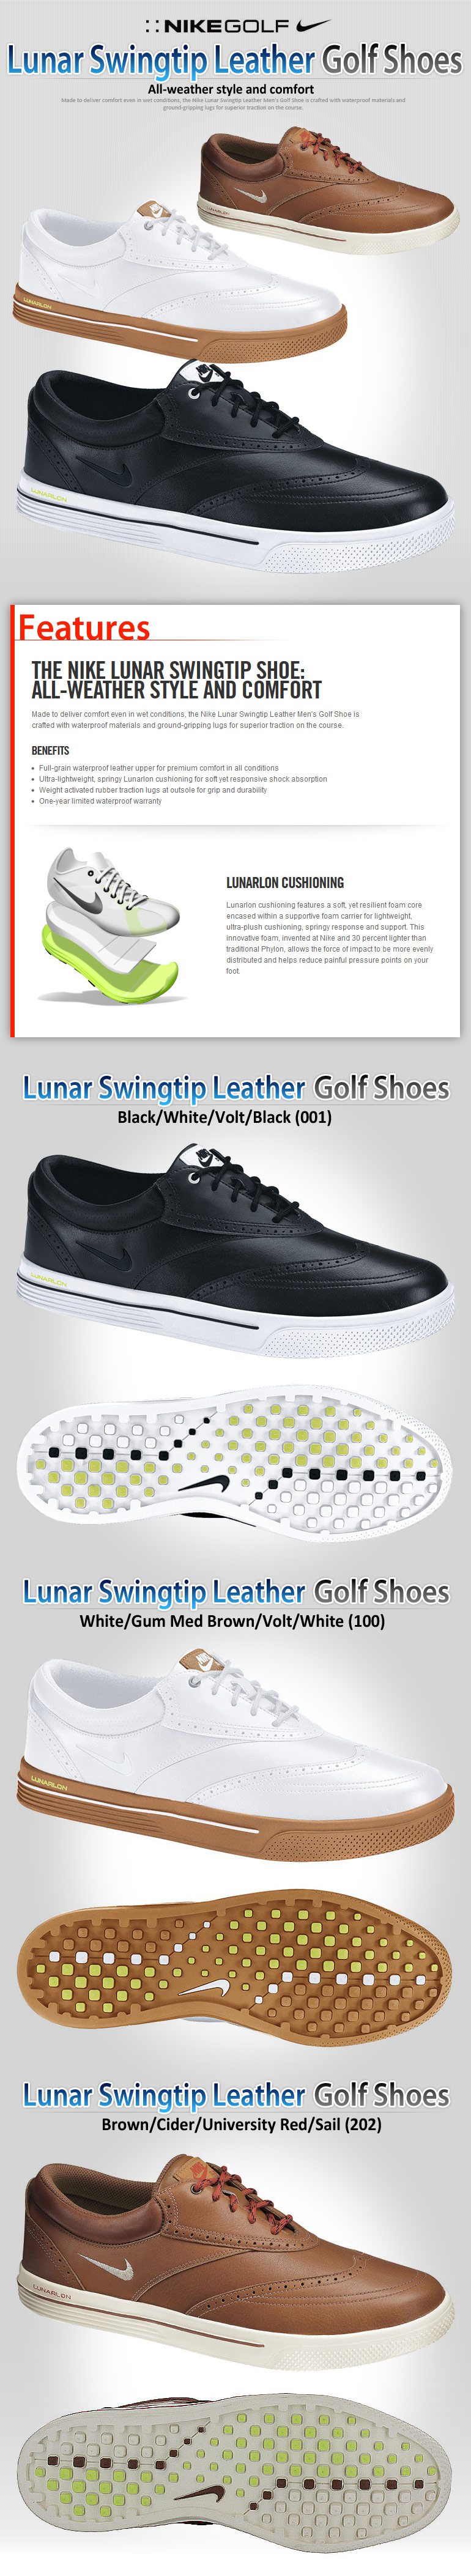 nike lunar swingtip leather golf shoes mens